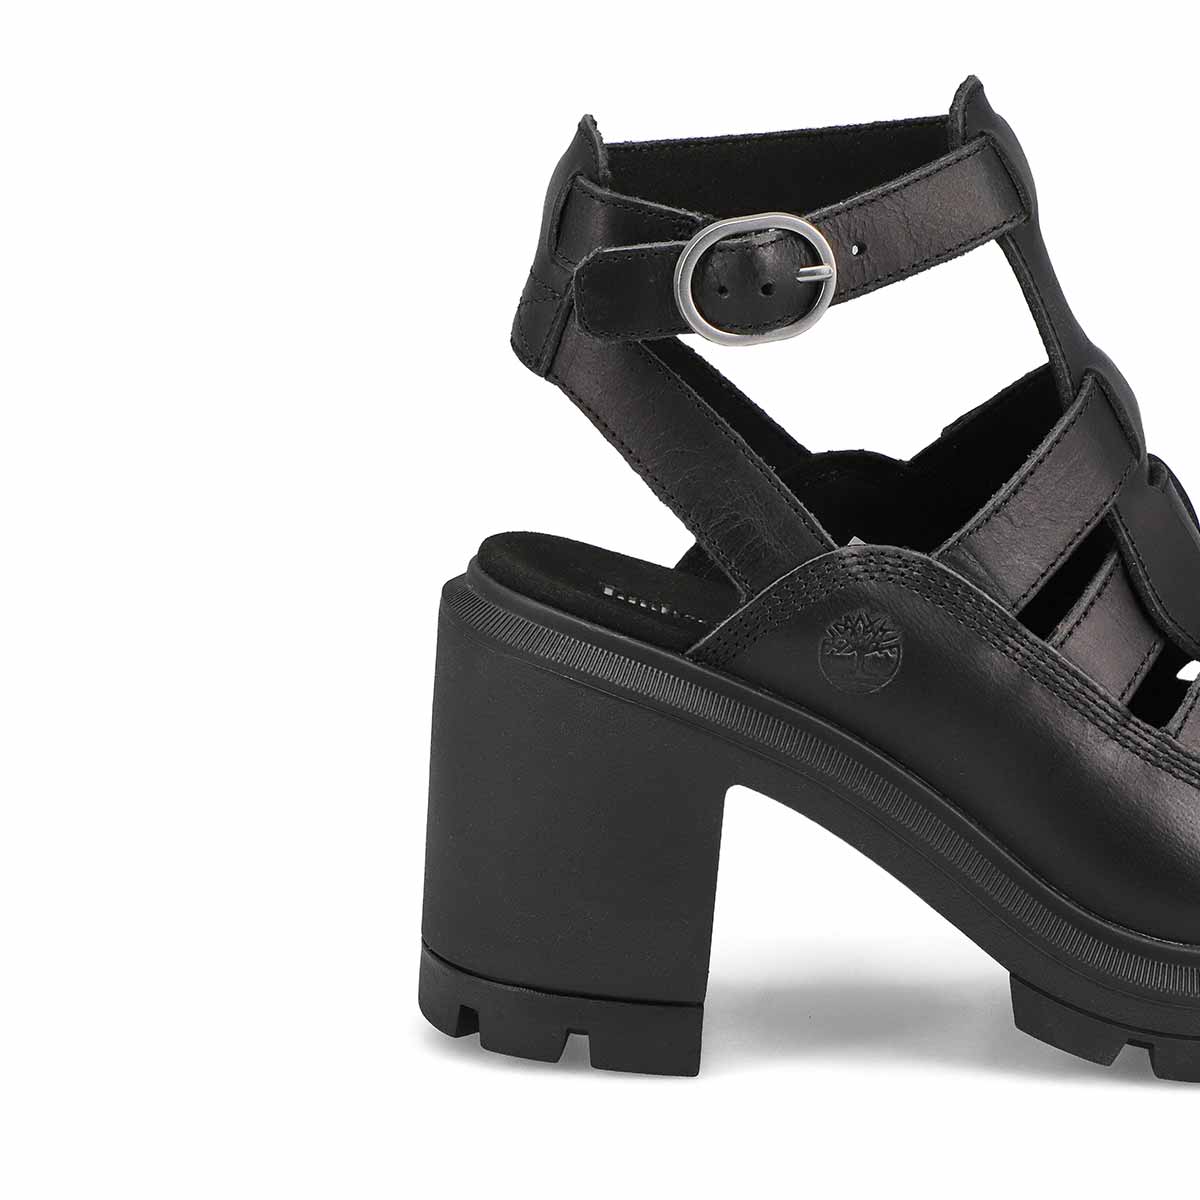 Women's Allington Heights Heel Sandal - Black